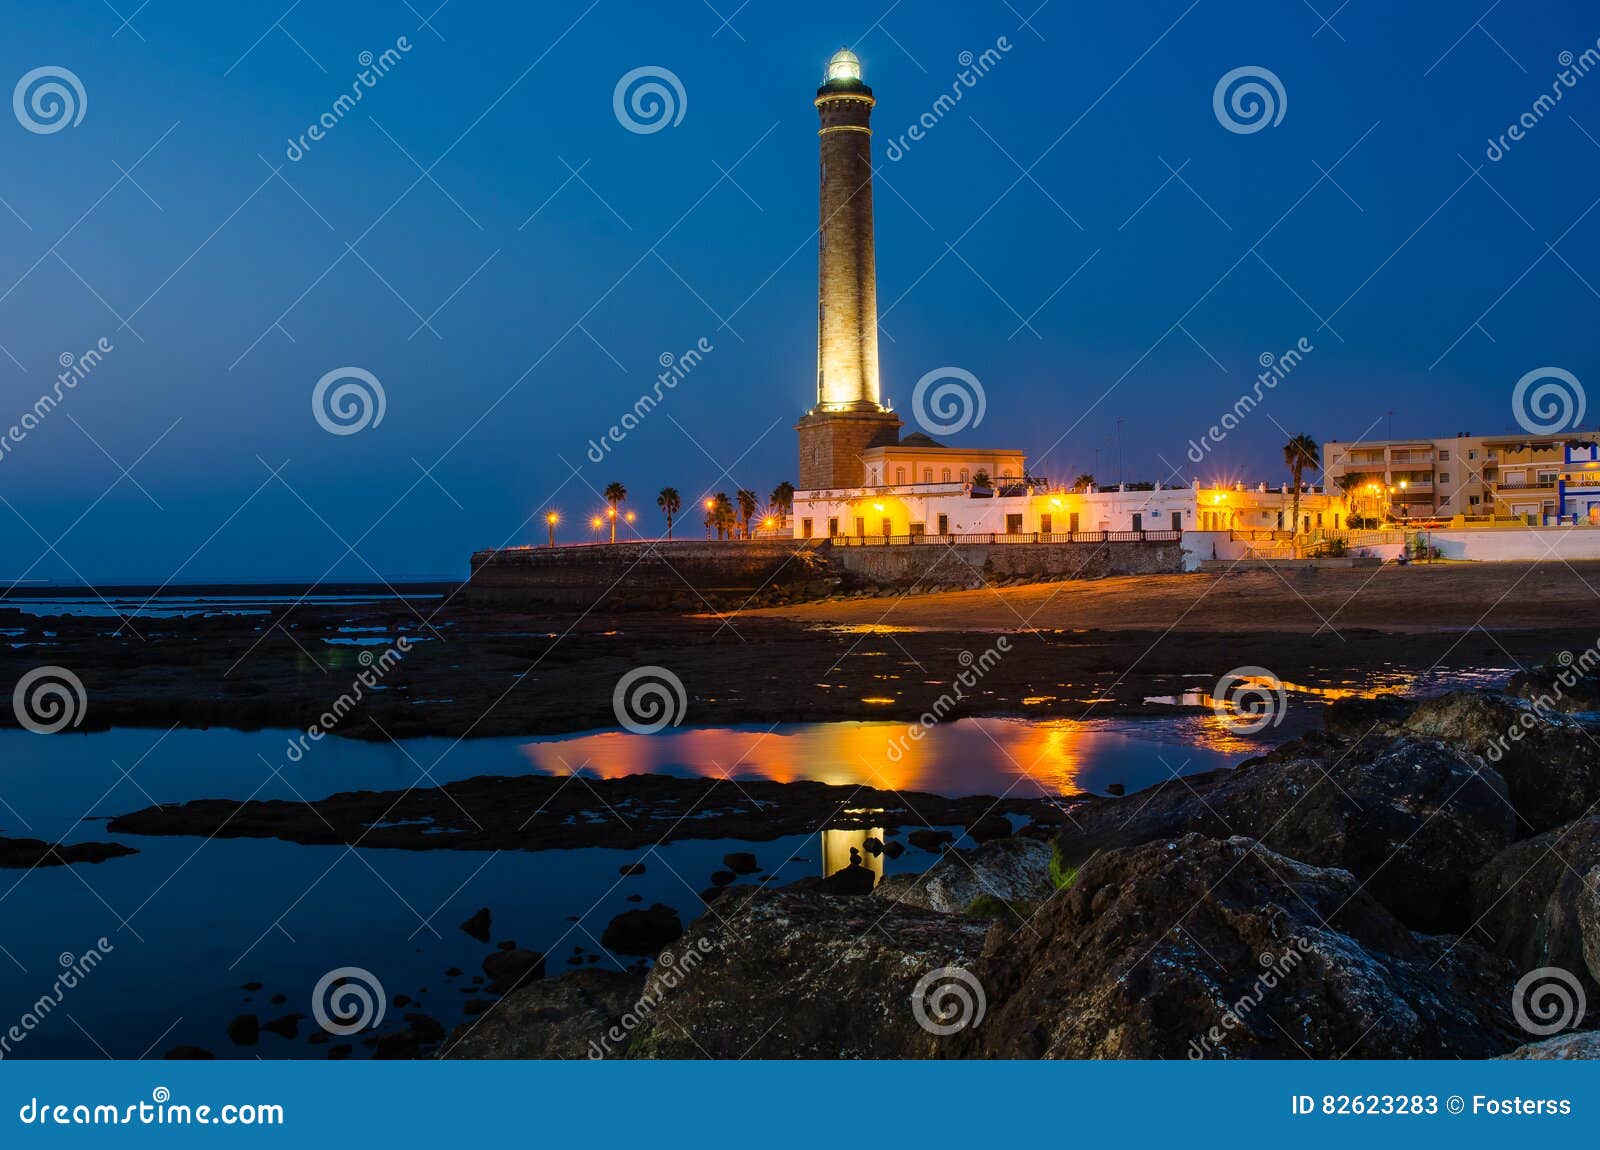 lighthouse of chipiona